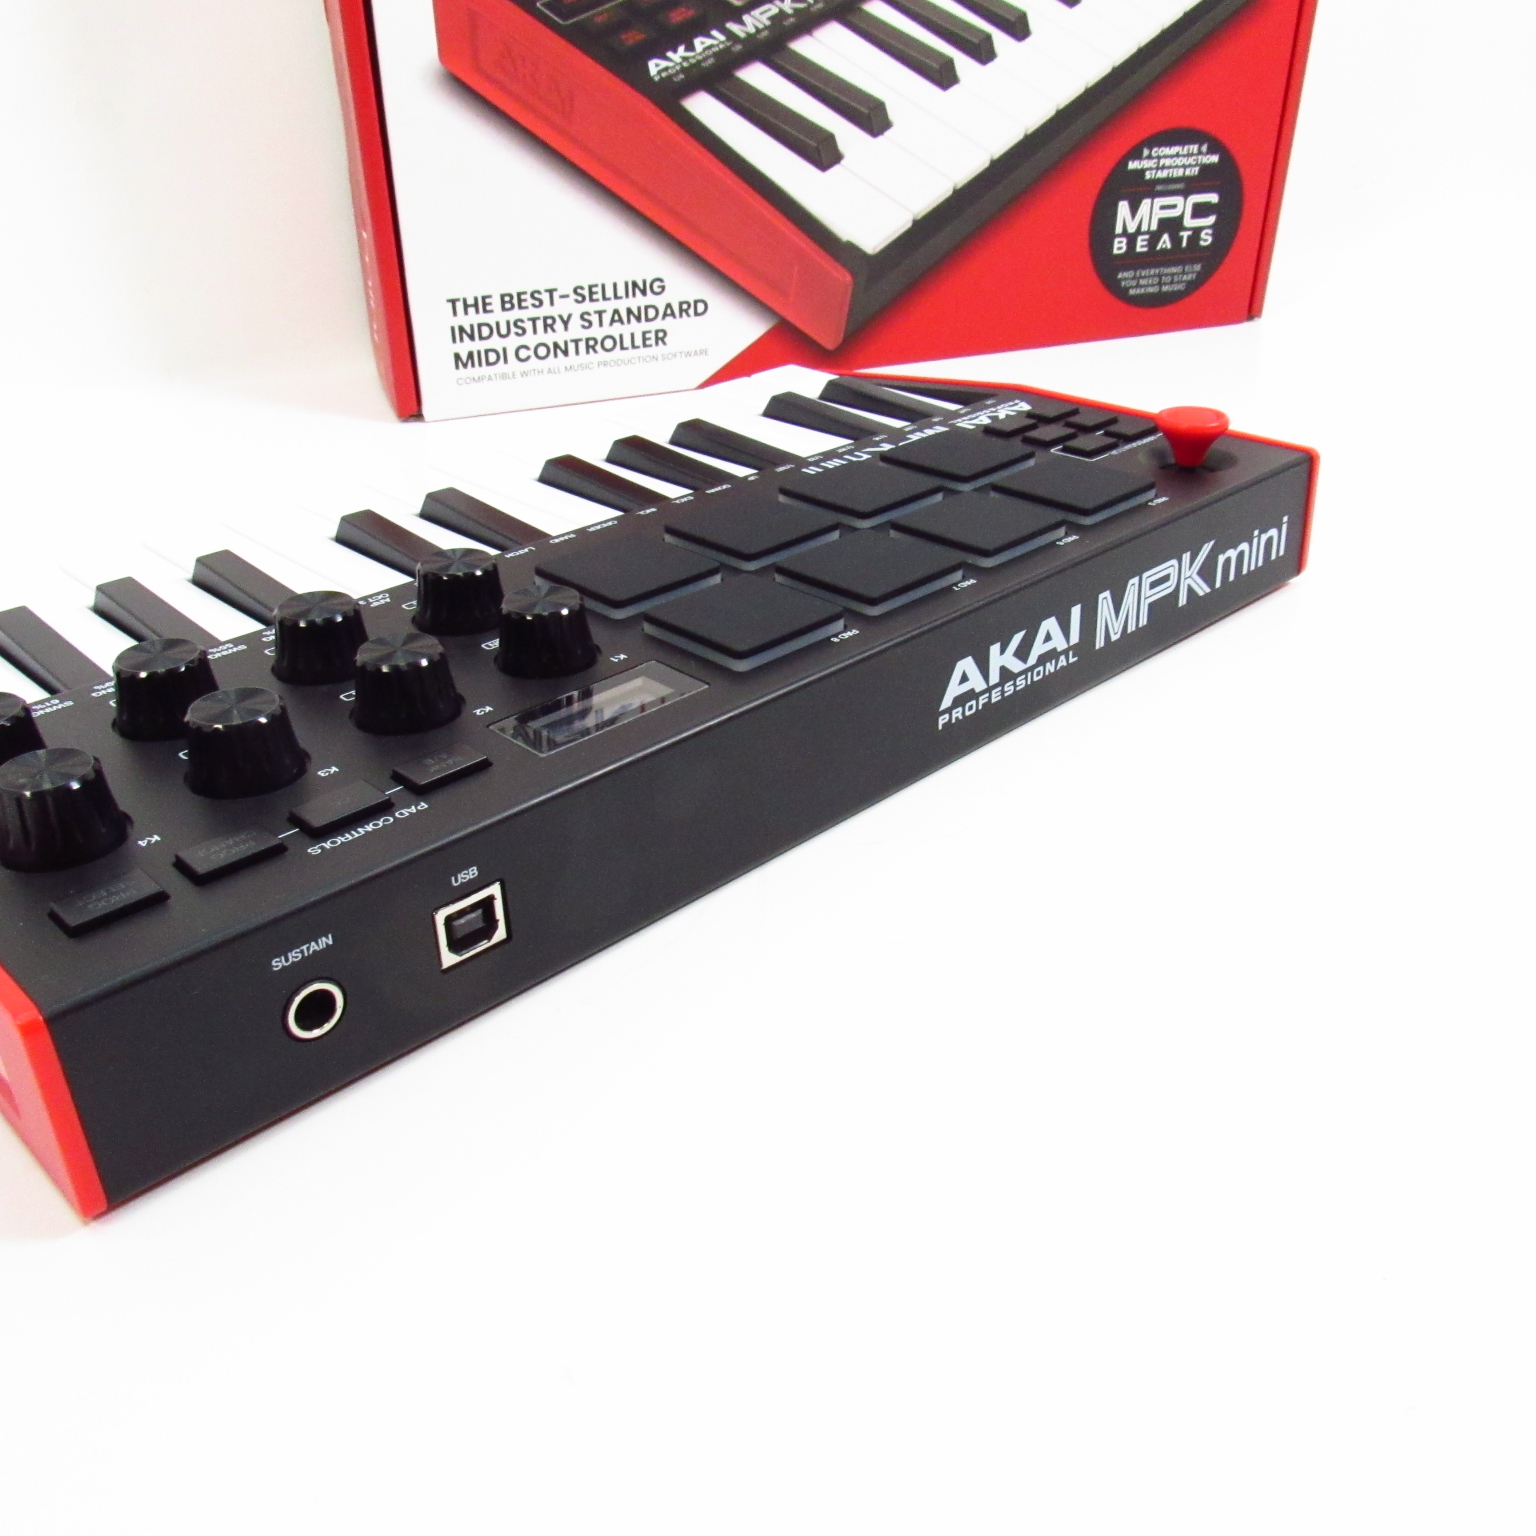 Akai Professional MPK MINI MK3 MIDI Compact Keyboard and Pad